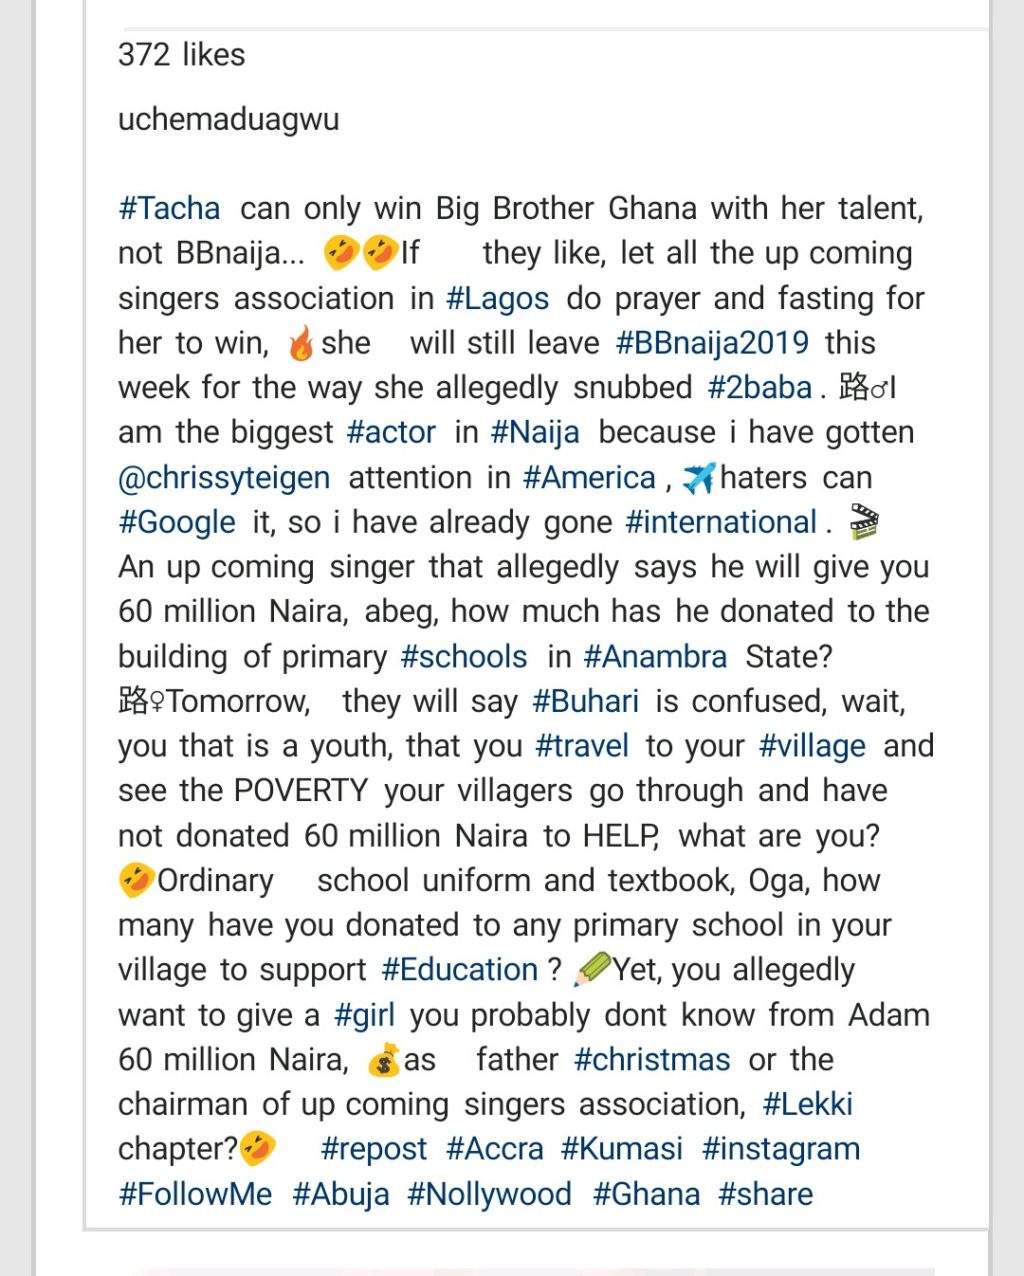 BBNaija: Uche Maduagwu trolls fans and celebrities supporting Tacha